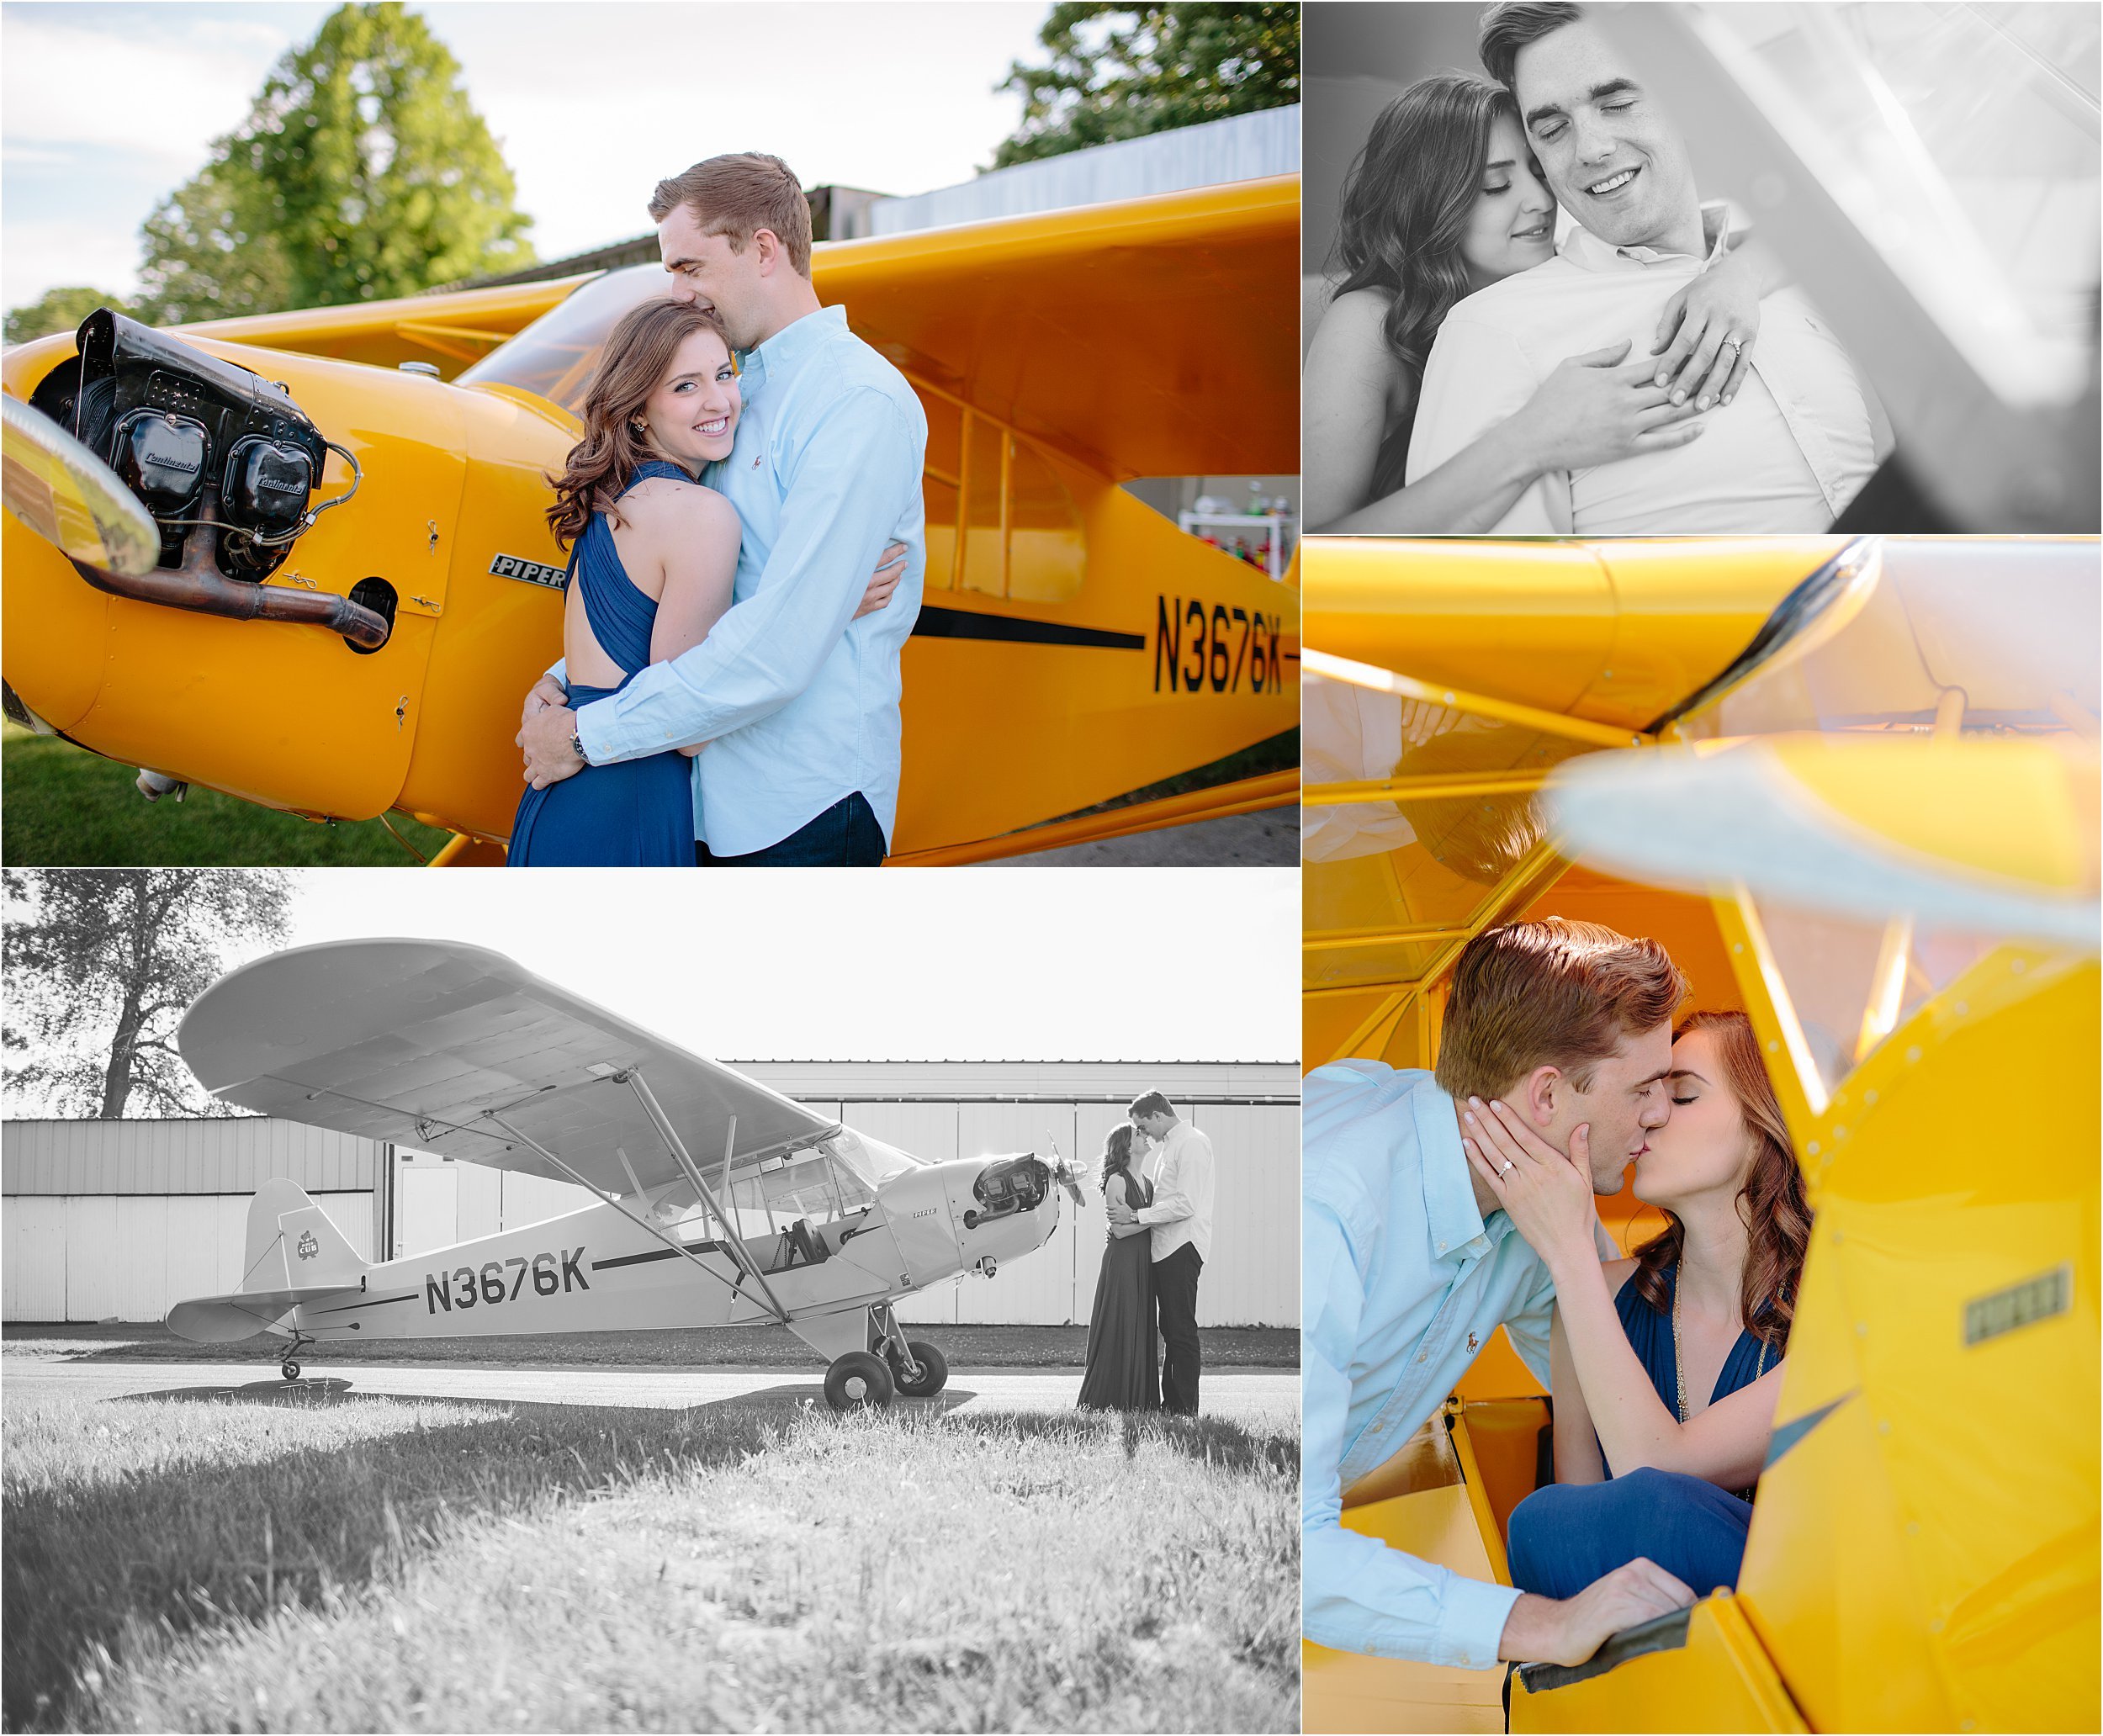 08-romantic-engaged-couple-posing-nature-airplane.JPG